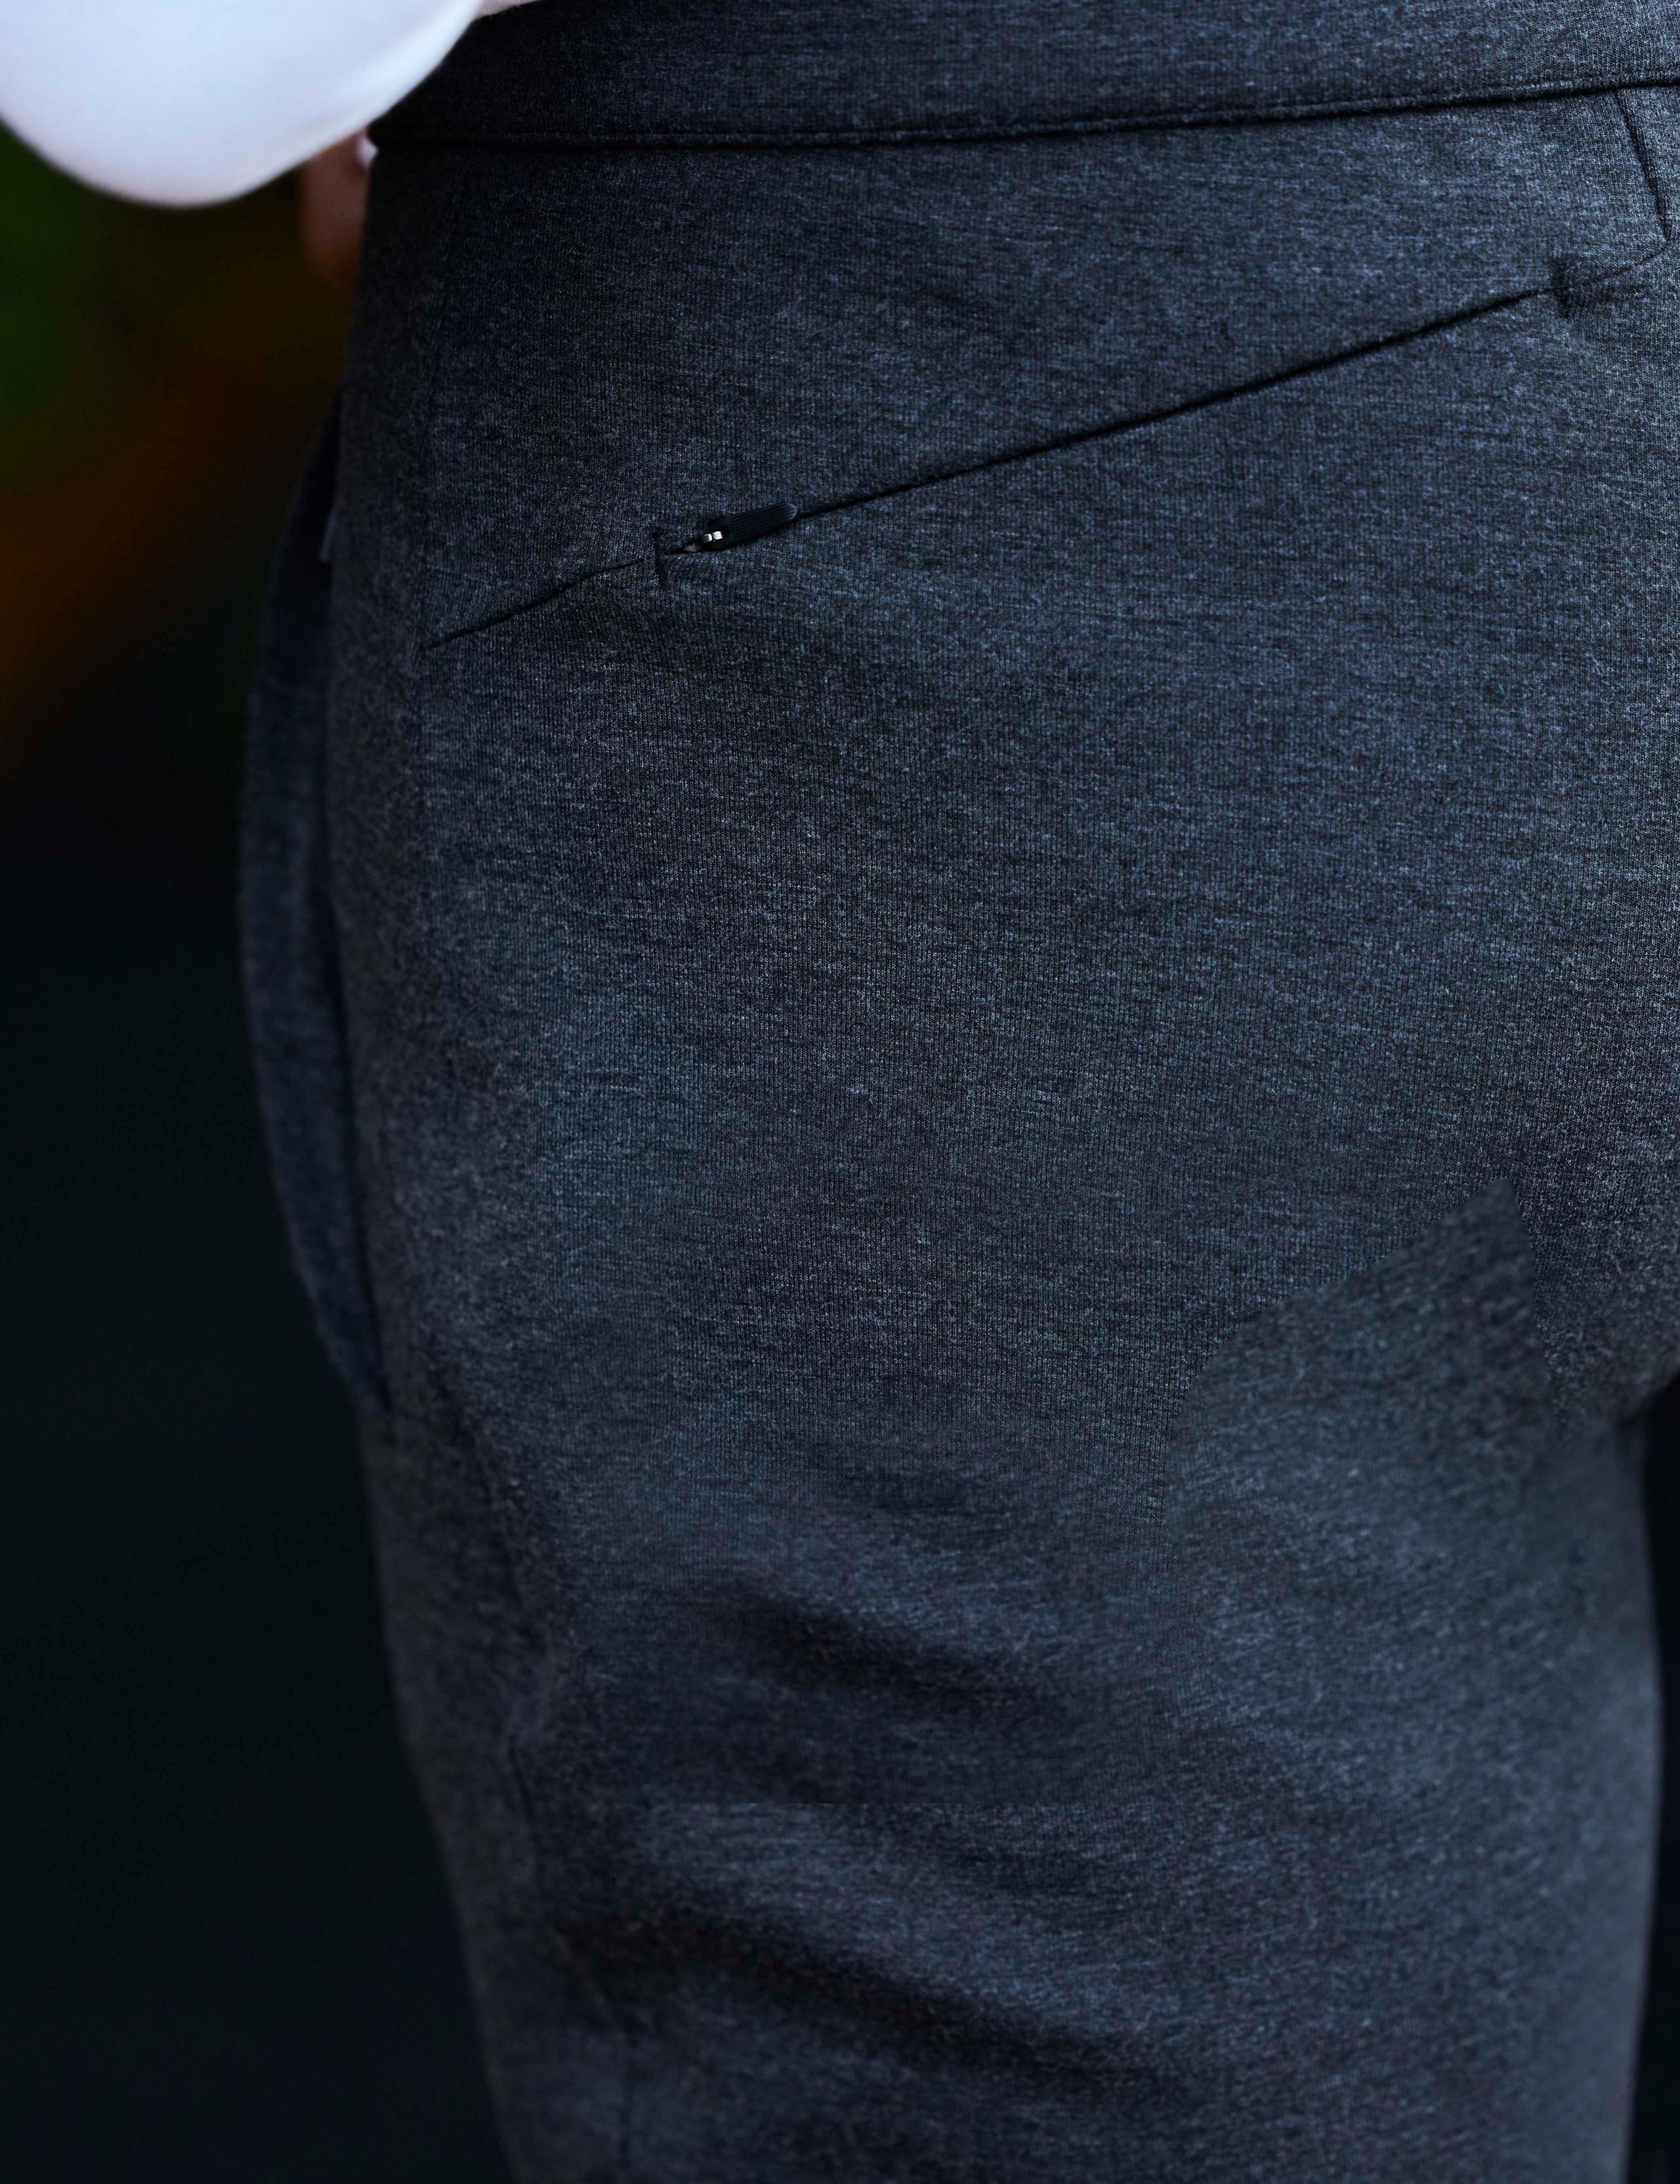 Detail of back pocket zipper of Forge Pant